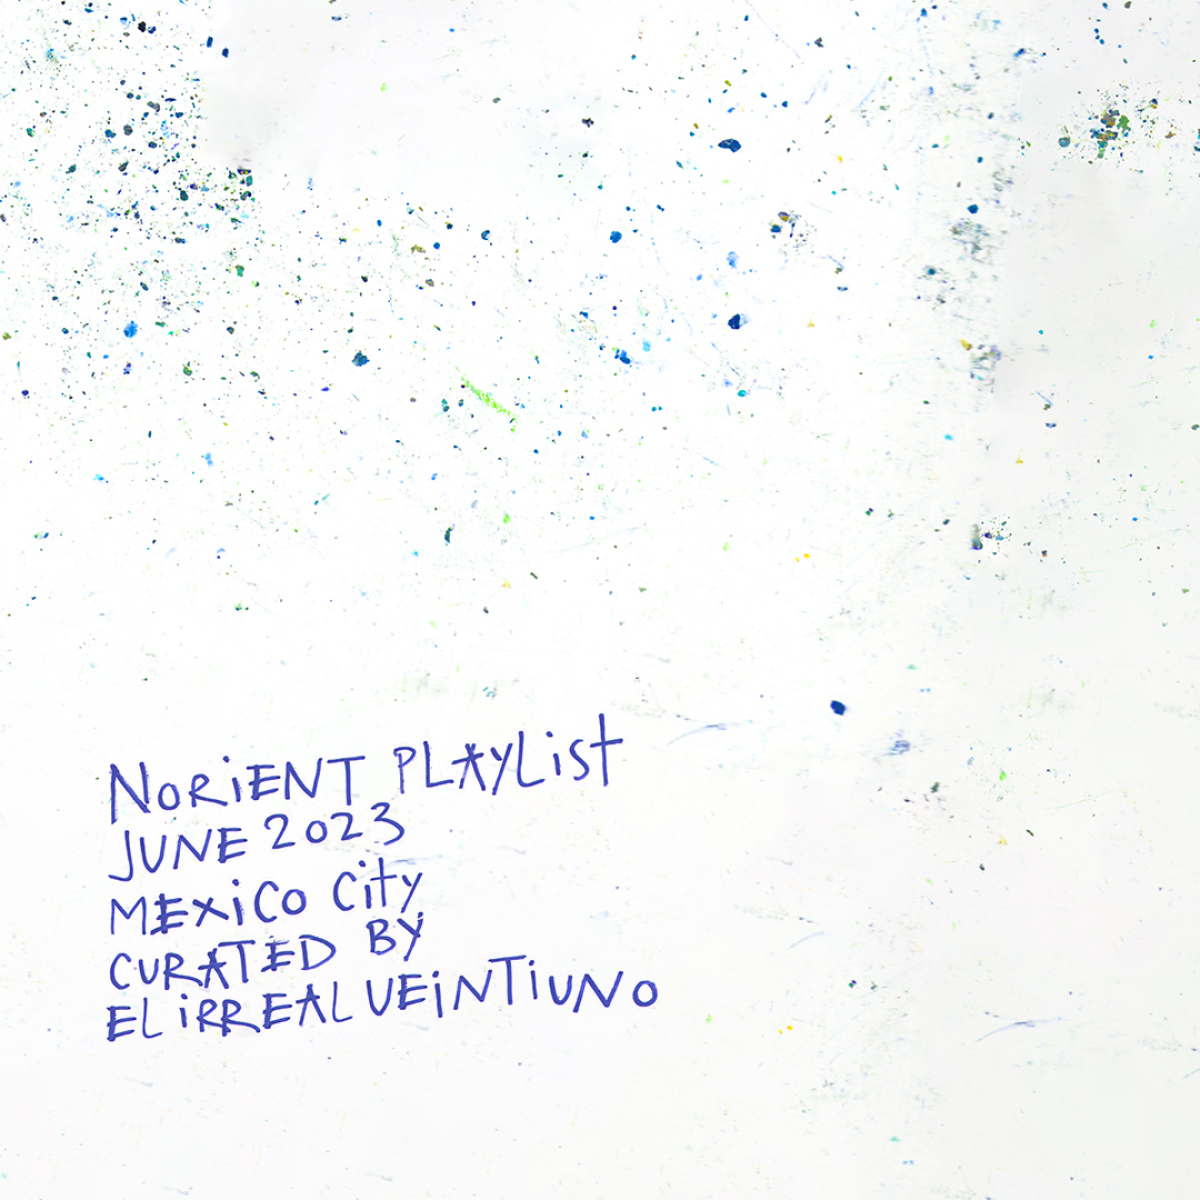 Norient Playlist 6/23: Mexico City.